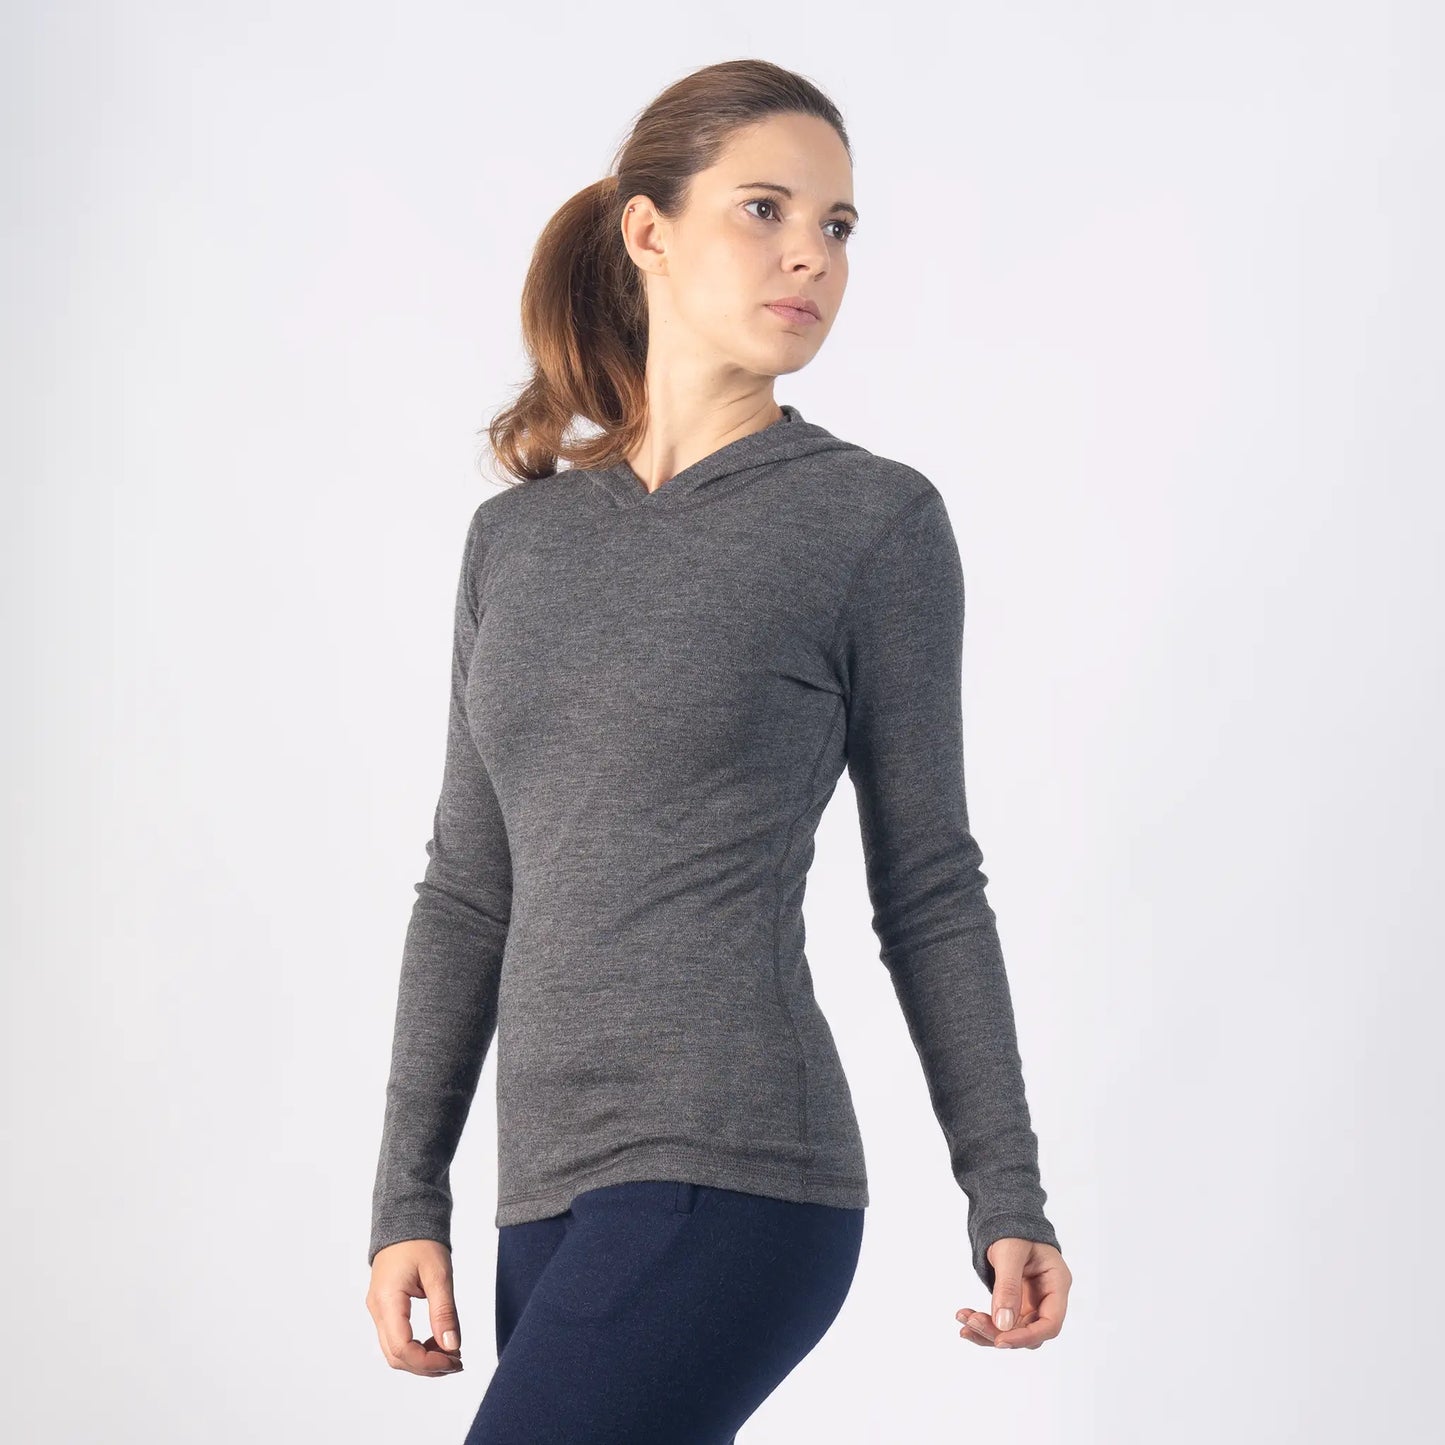 womens alpaca thin sweater hoodie thermal wool lightweight color gray